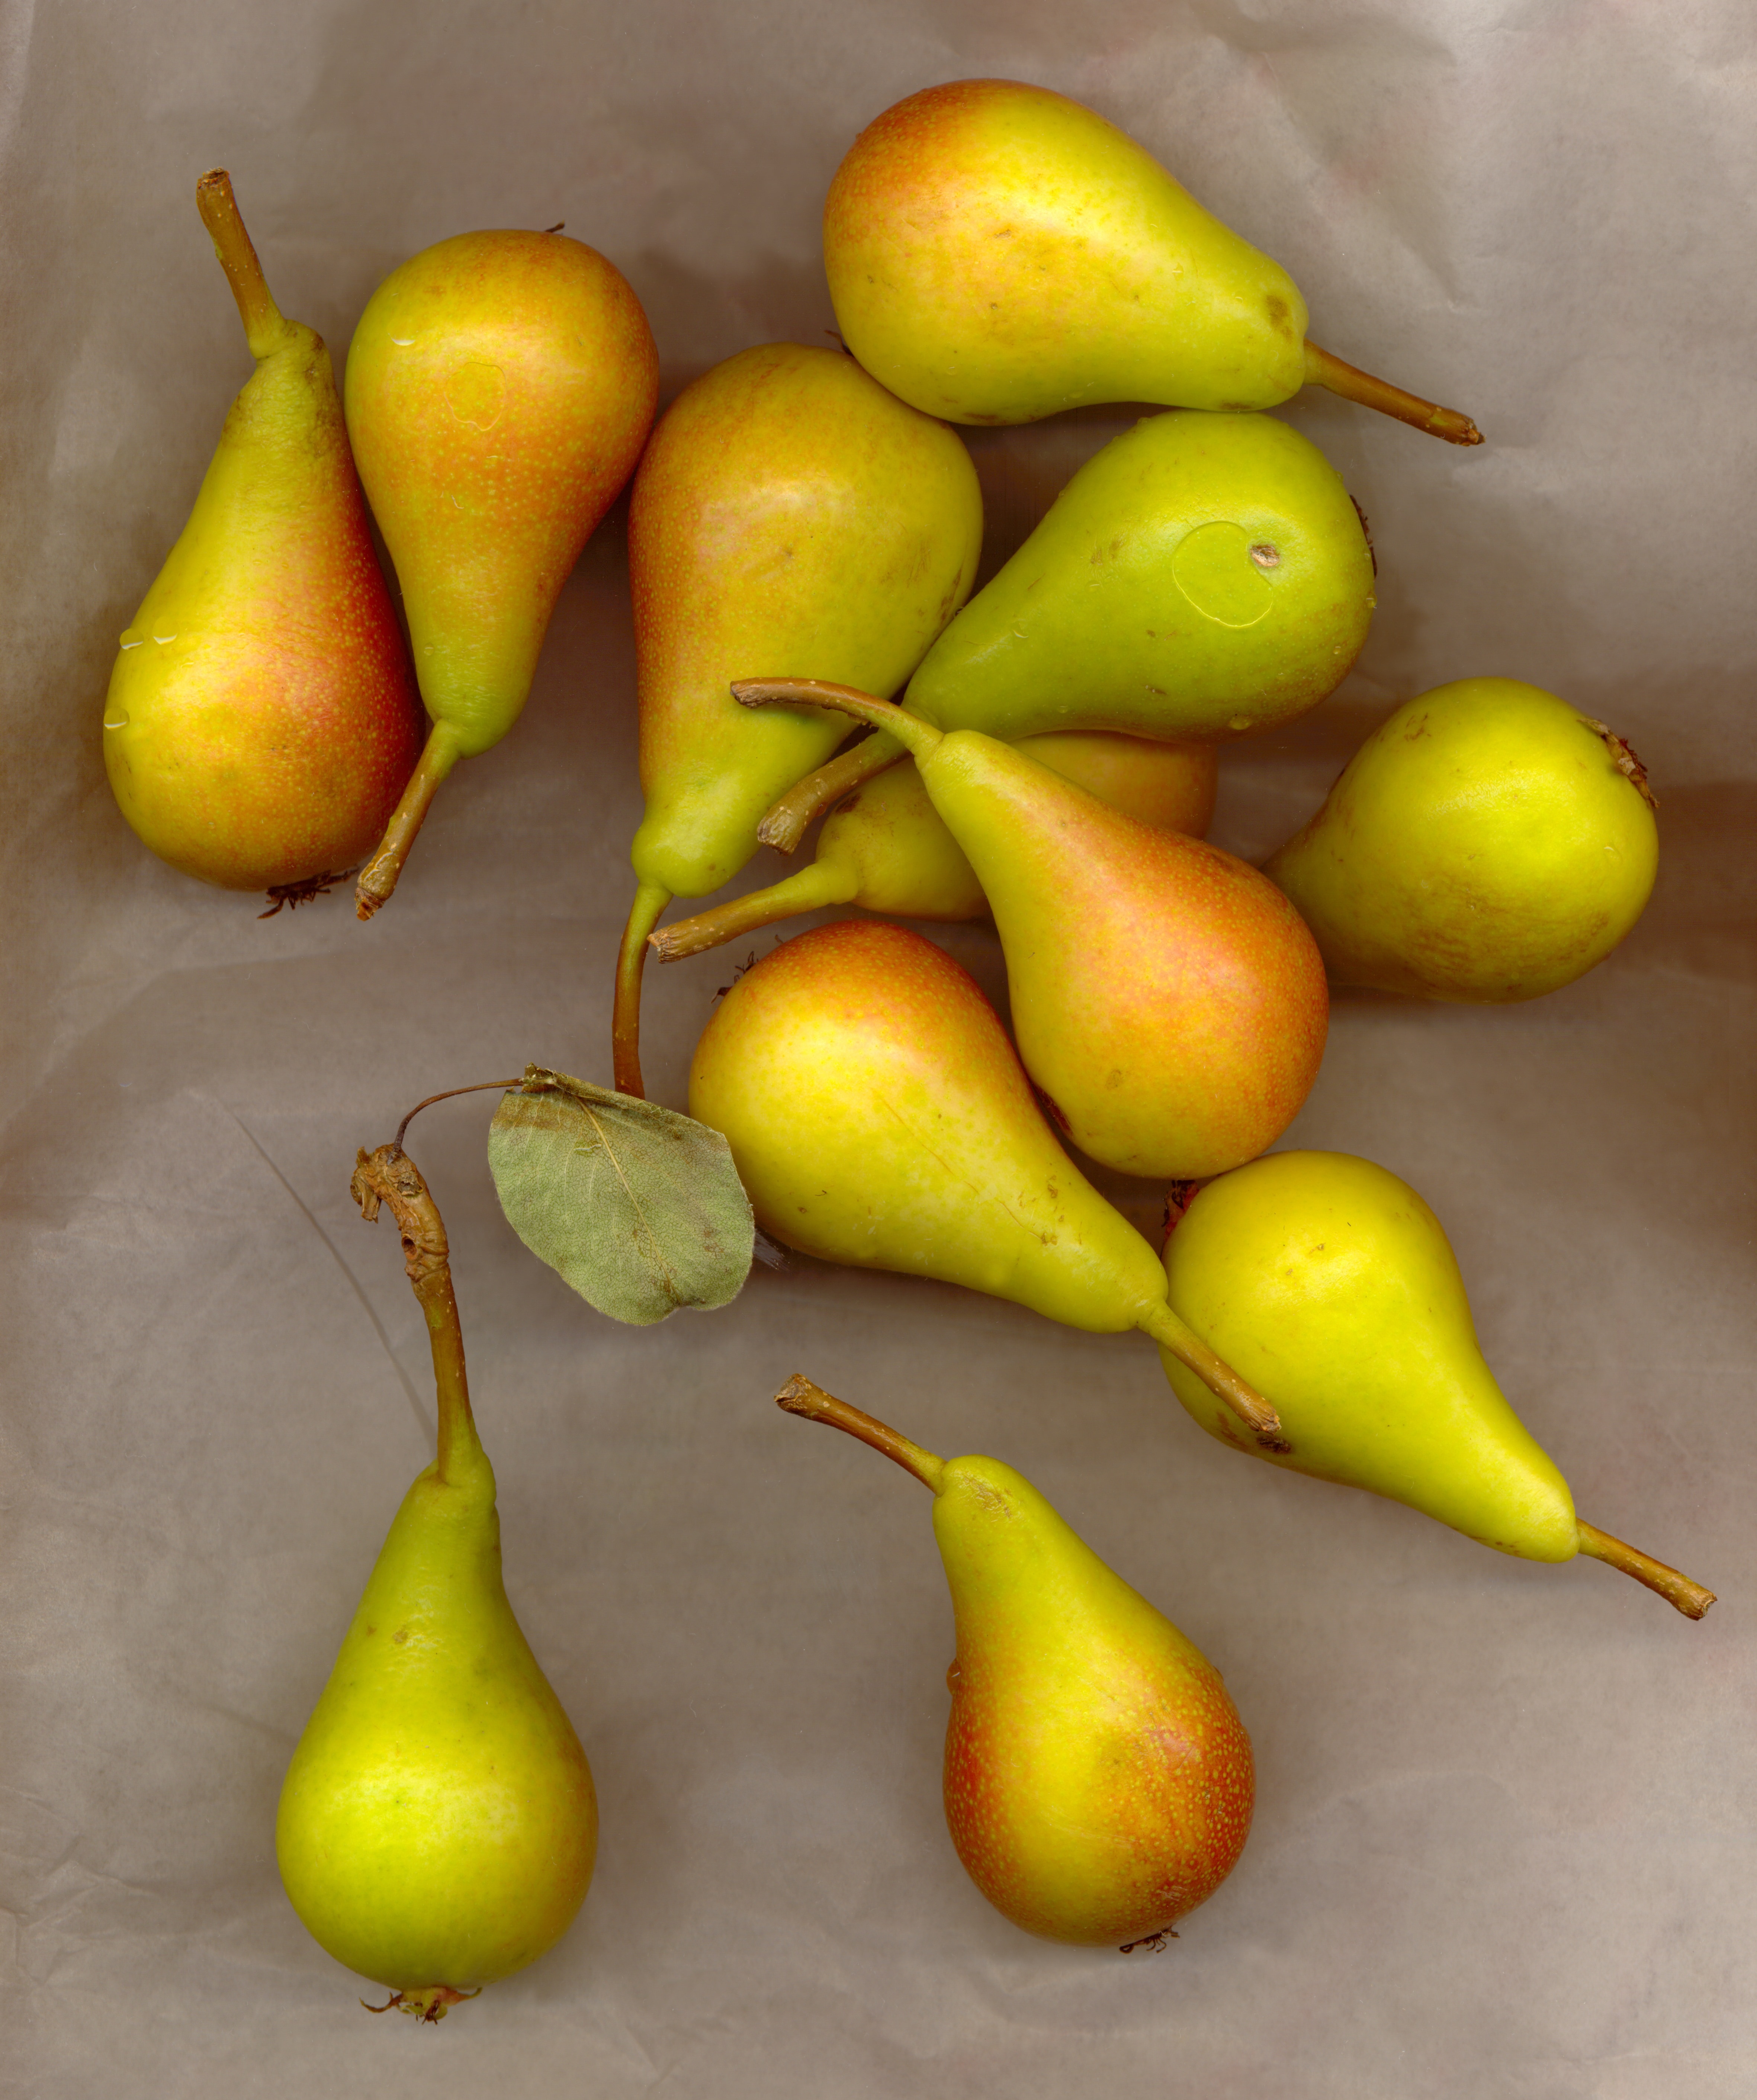 beige and orange pears